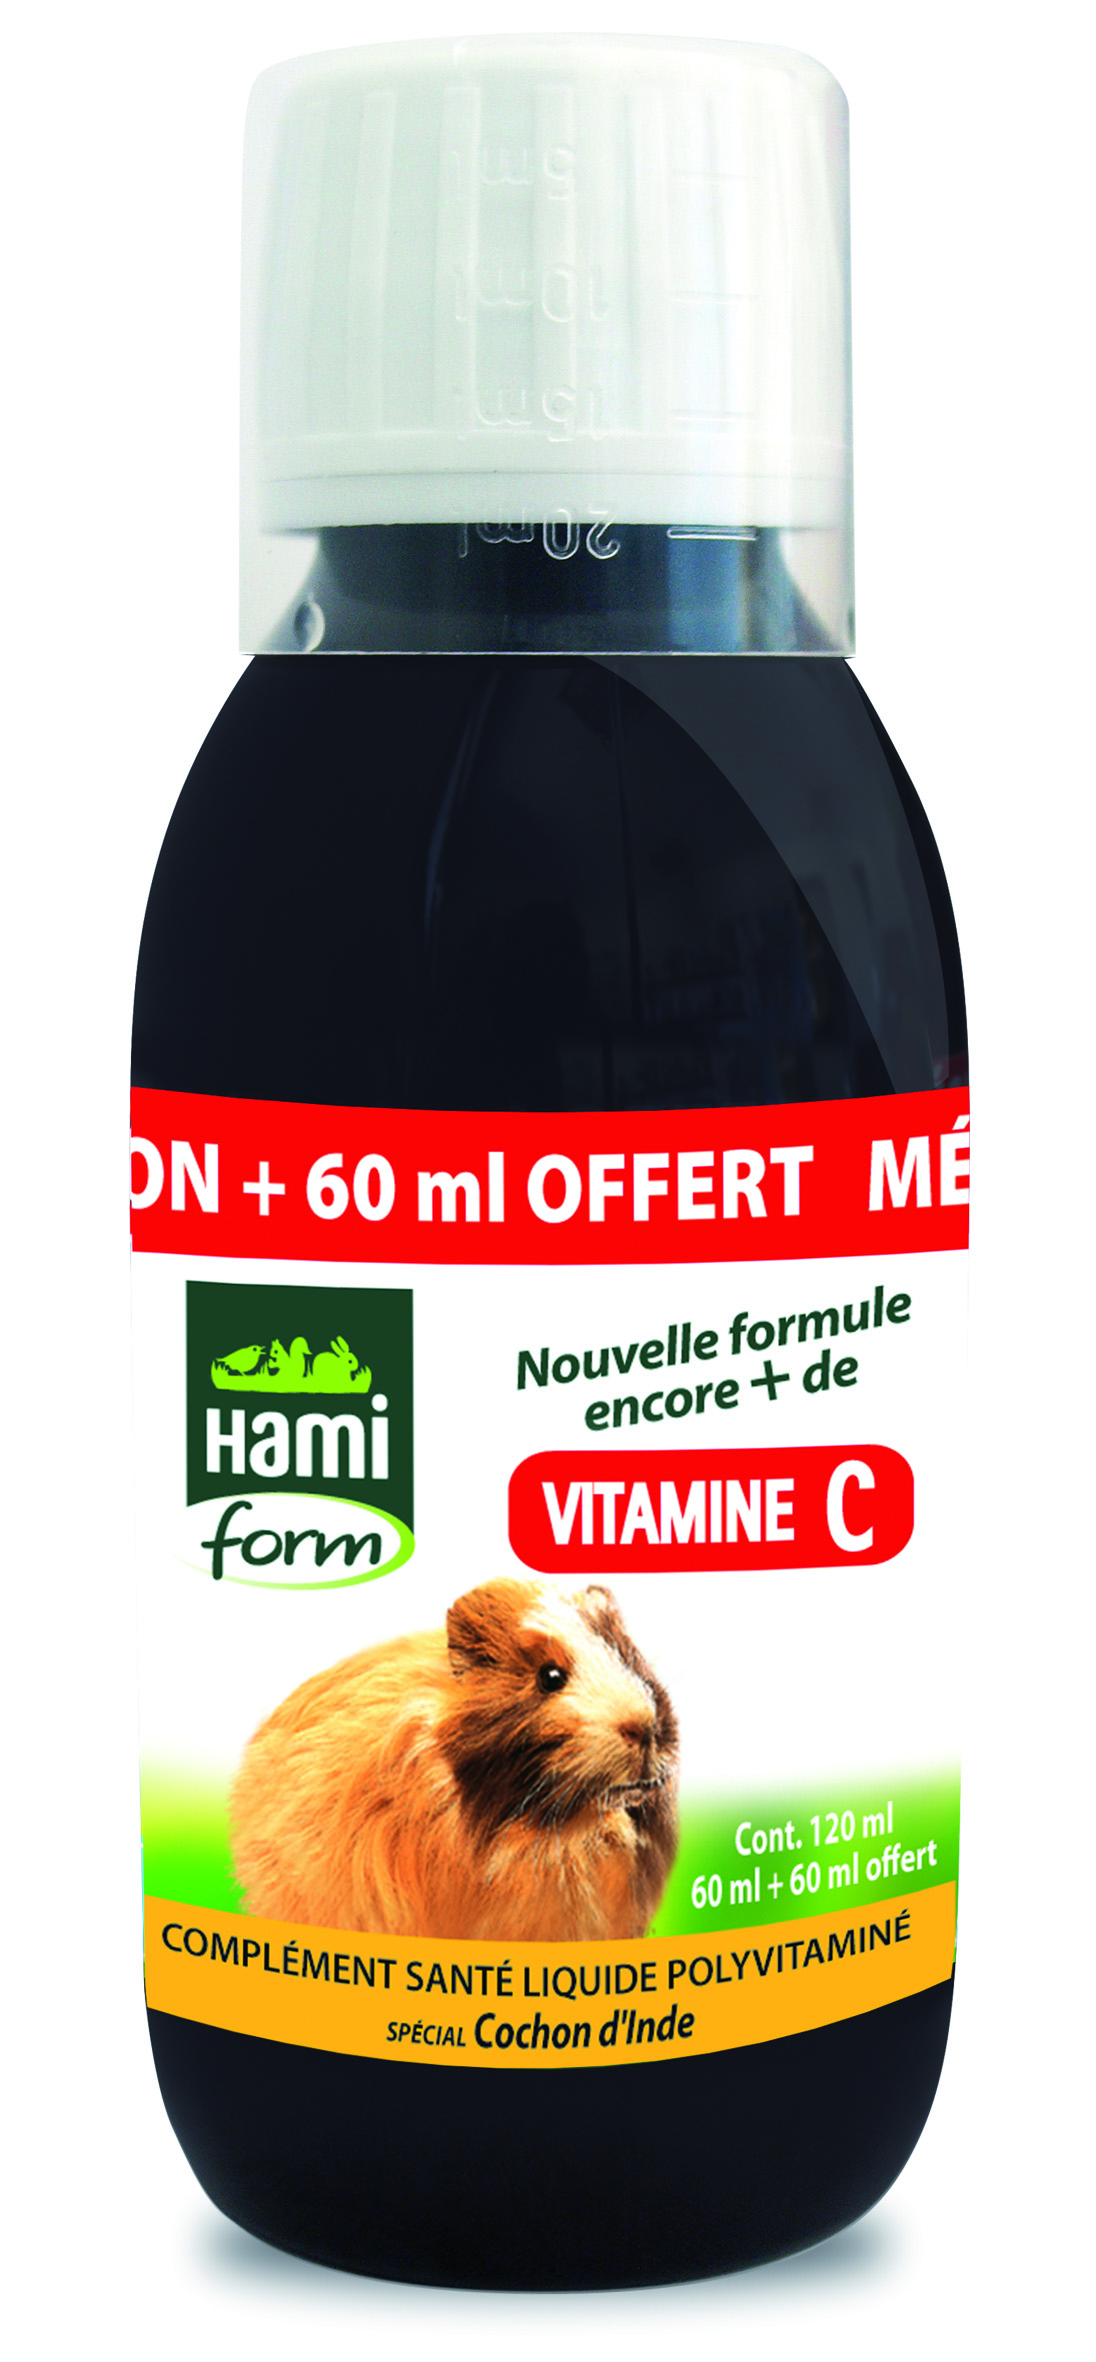 Complexe Polyvitamine Vitamine C Spécial Cochon d'inde - Gamm vert